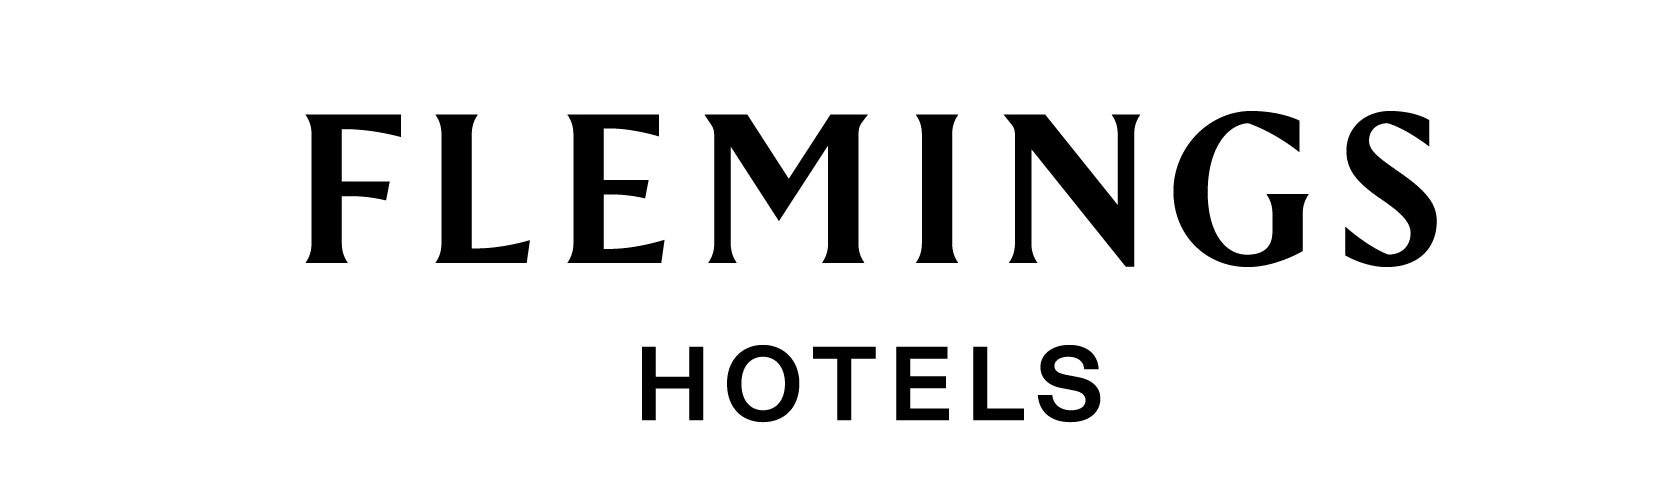  Fleming’s Hotel Group Frankfurt